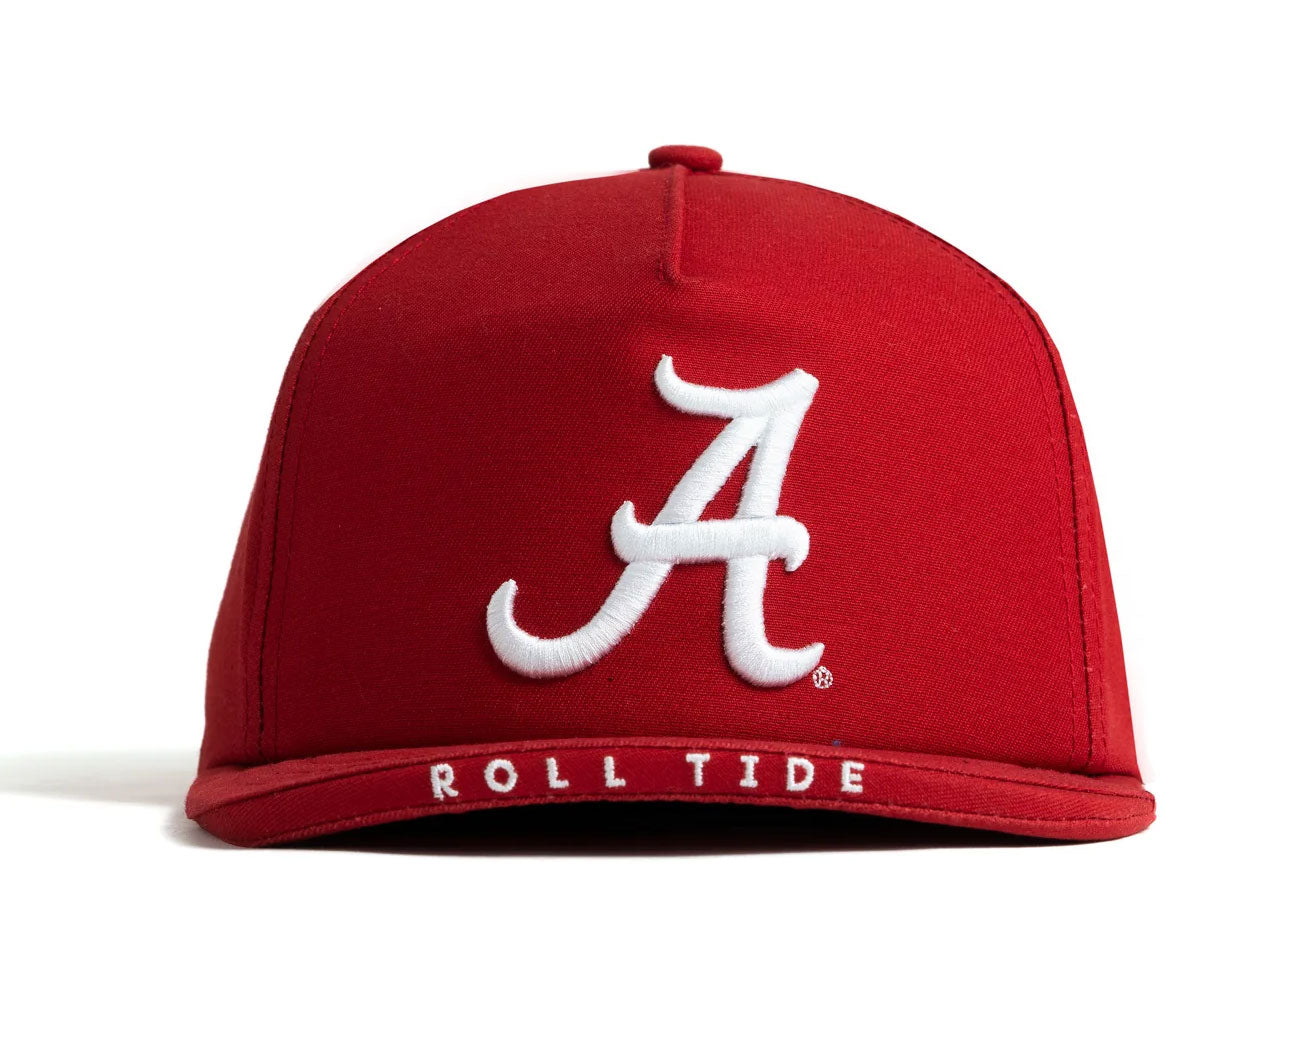 University of Alabama Hats, Snapback, Alabama Crimson Tide Caps